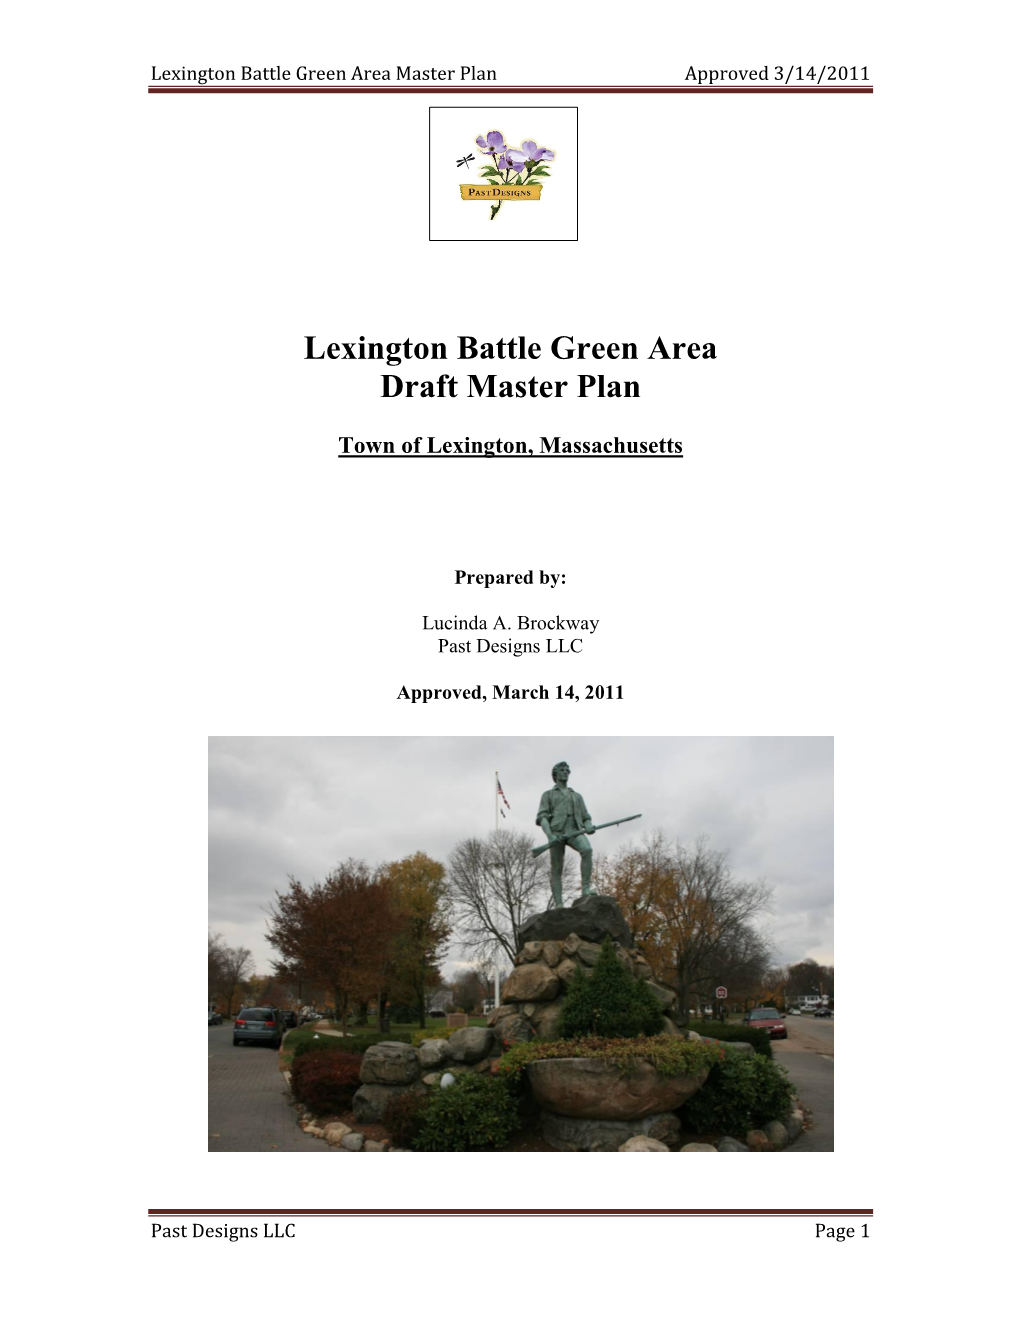 Lexington Battle Green Area Draft Master Plan